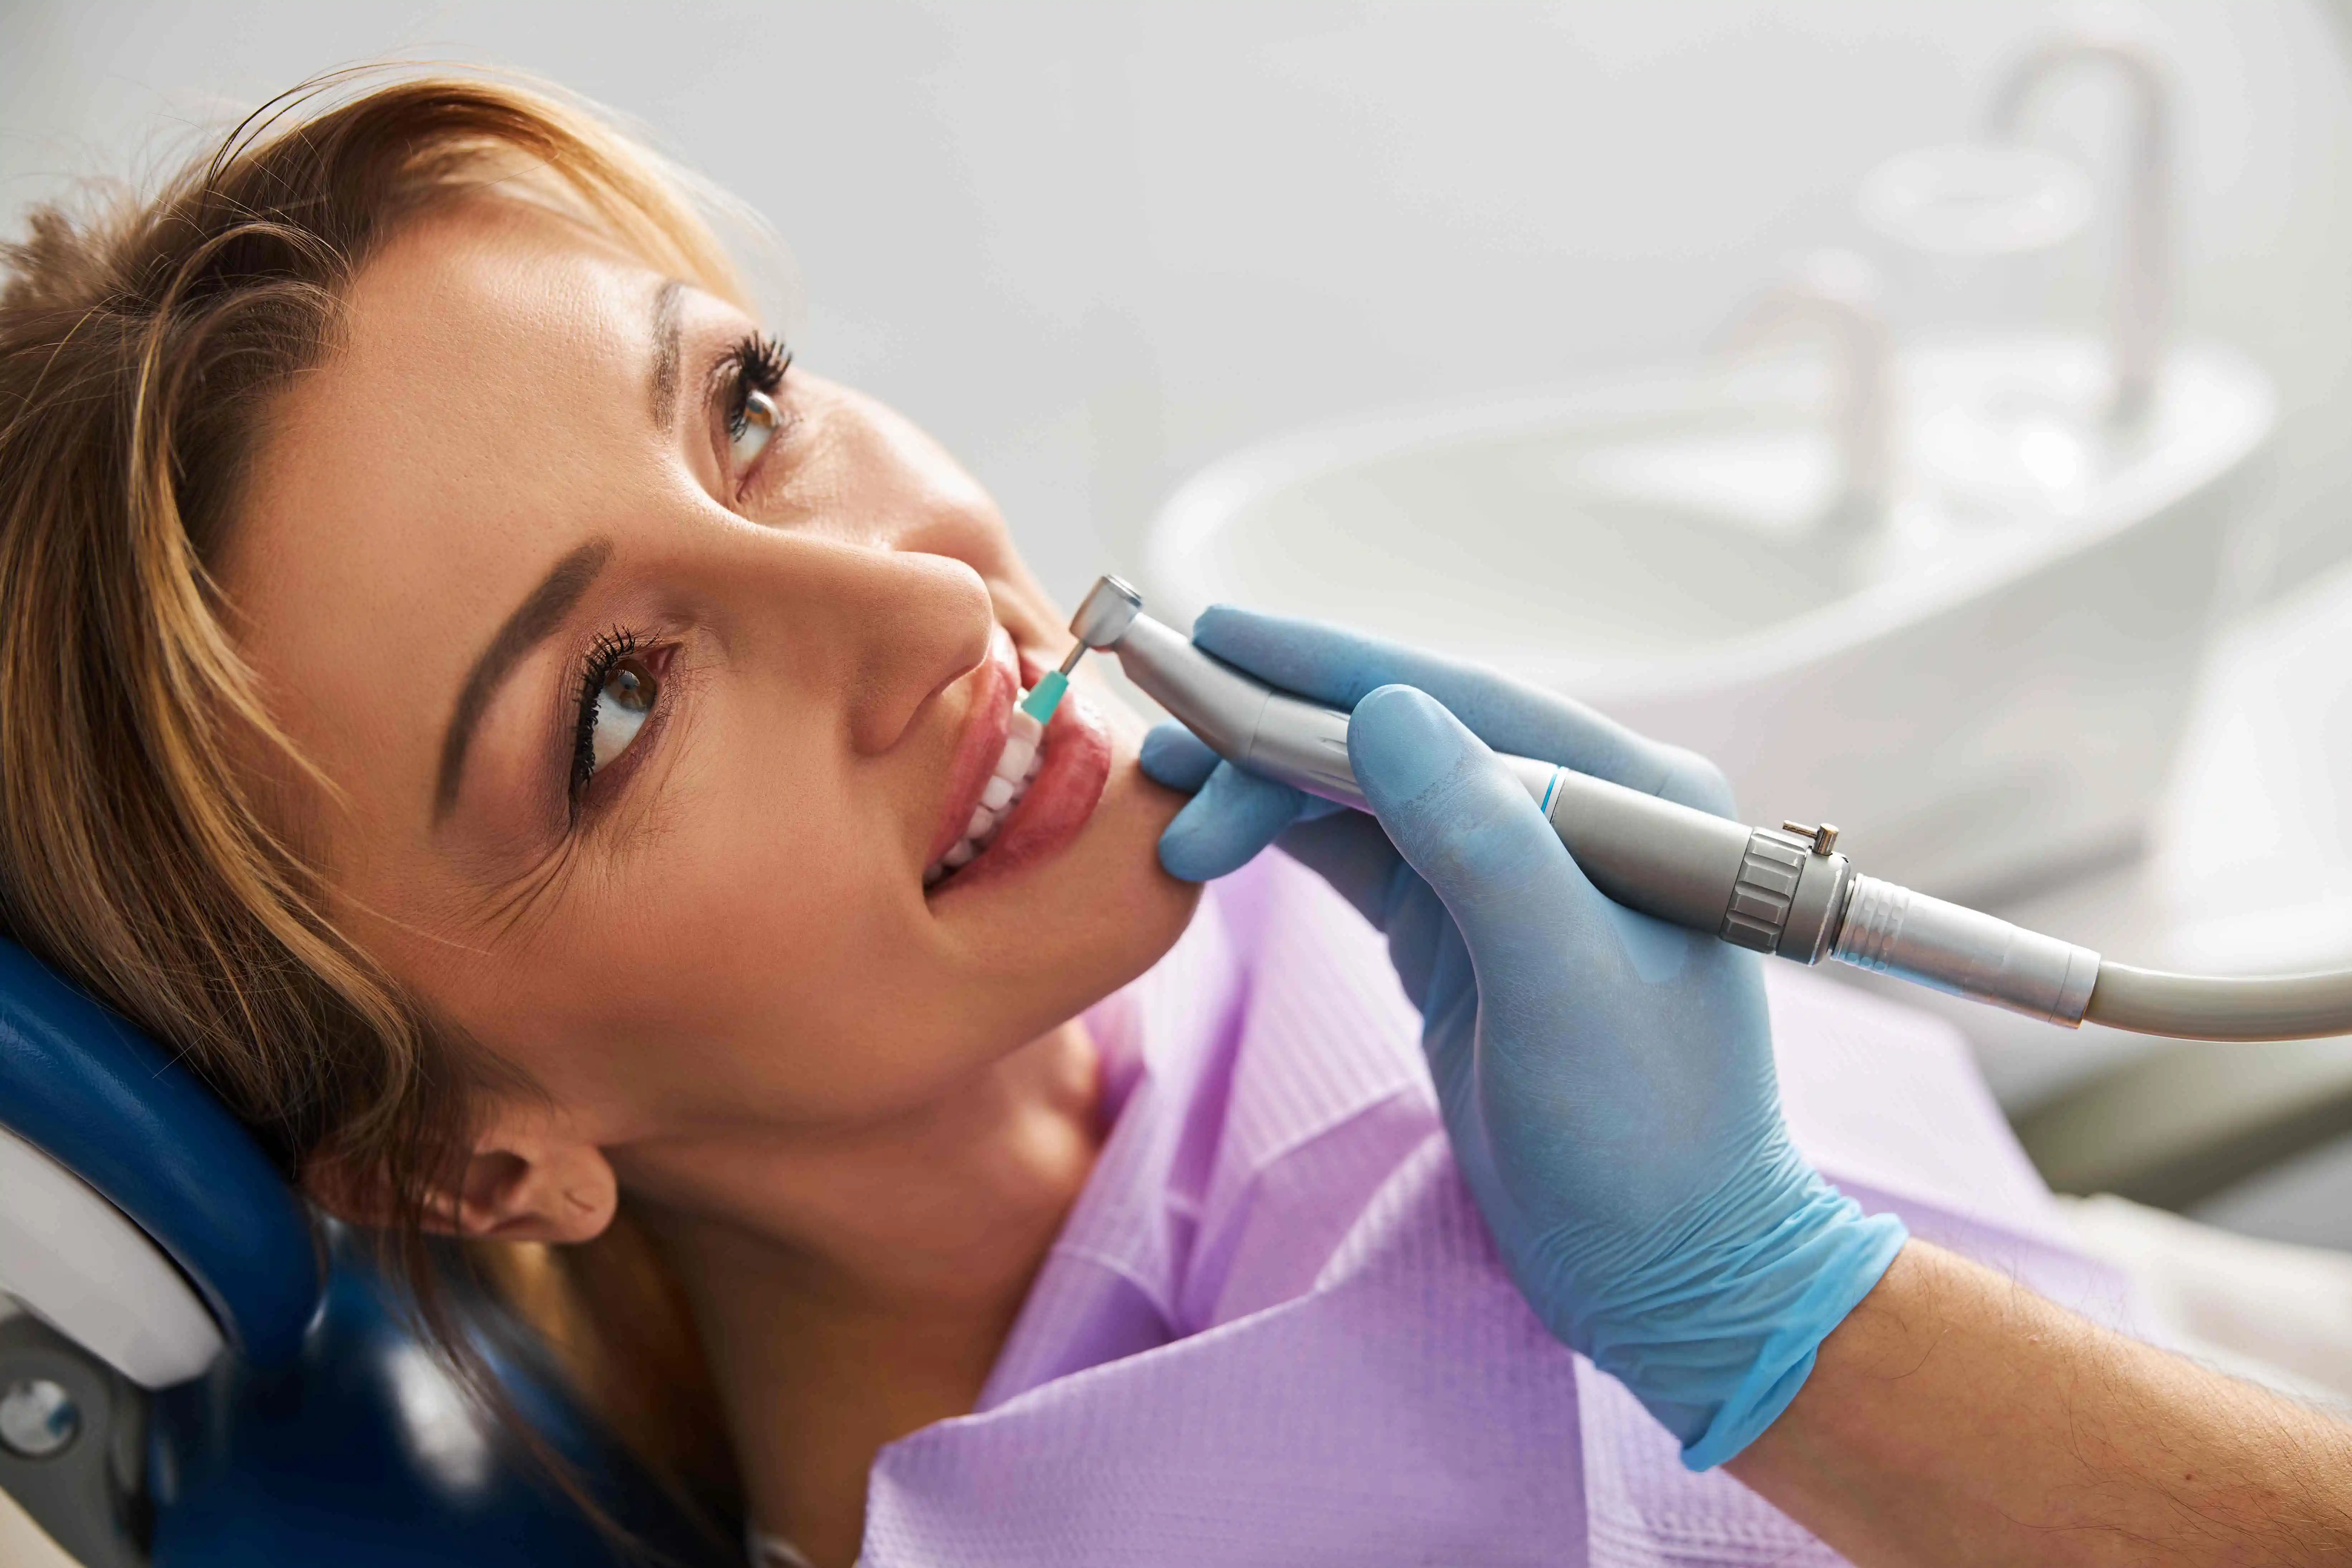 Procedure of Teeth Cleaning Involve